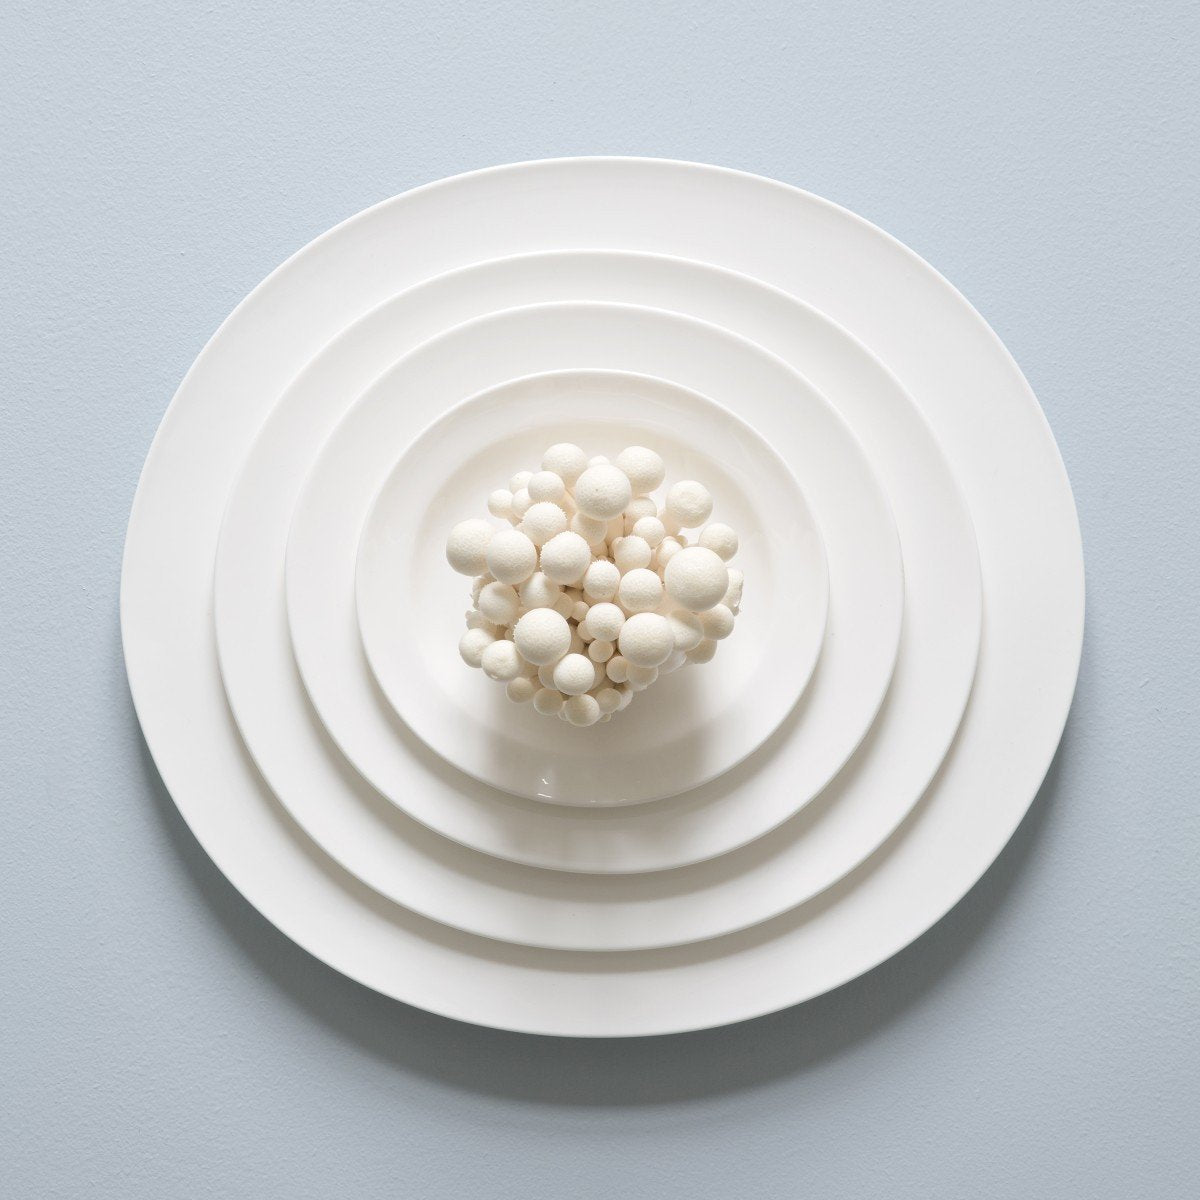 Kähler Kaolin Plate, Small